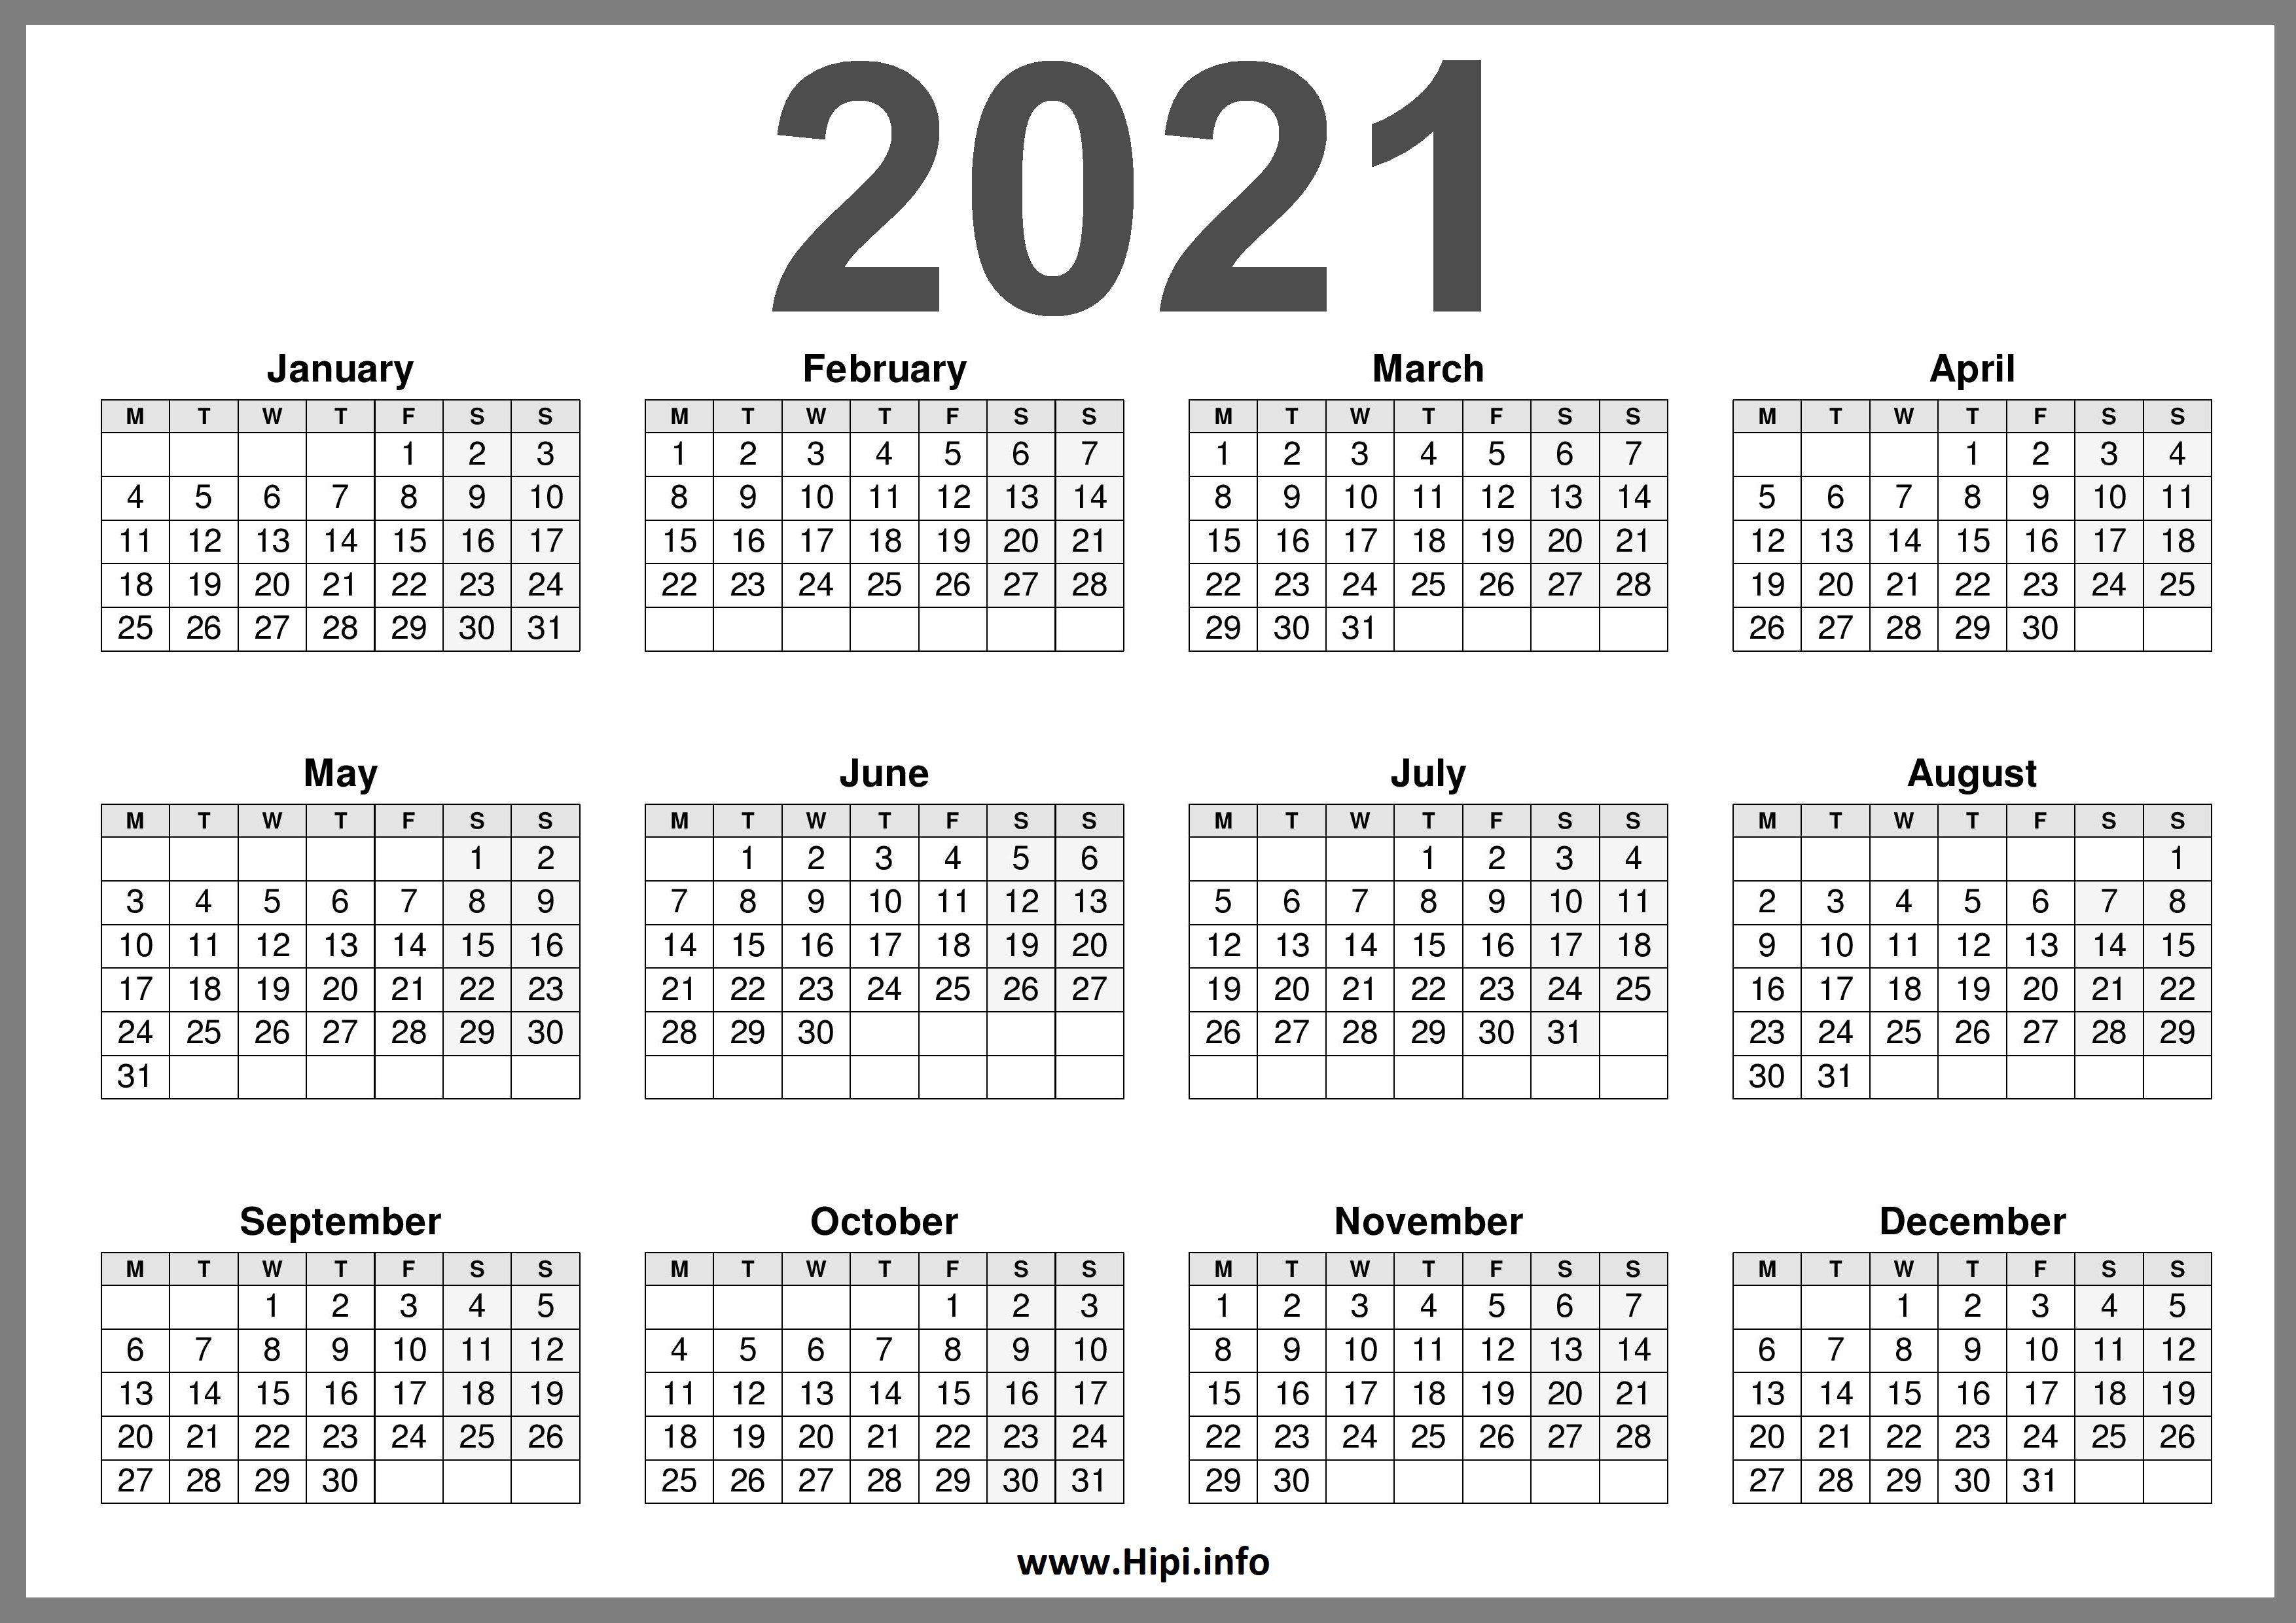 2021 Printable Calendar (UK) United Kingdom Hipi.info